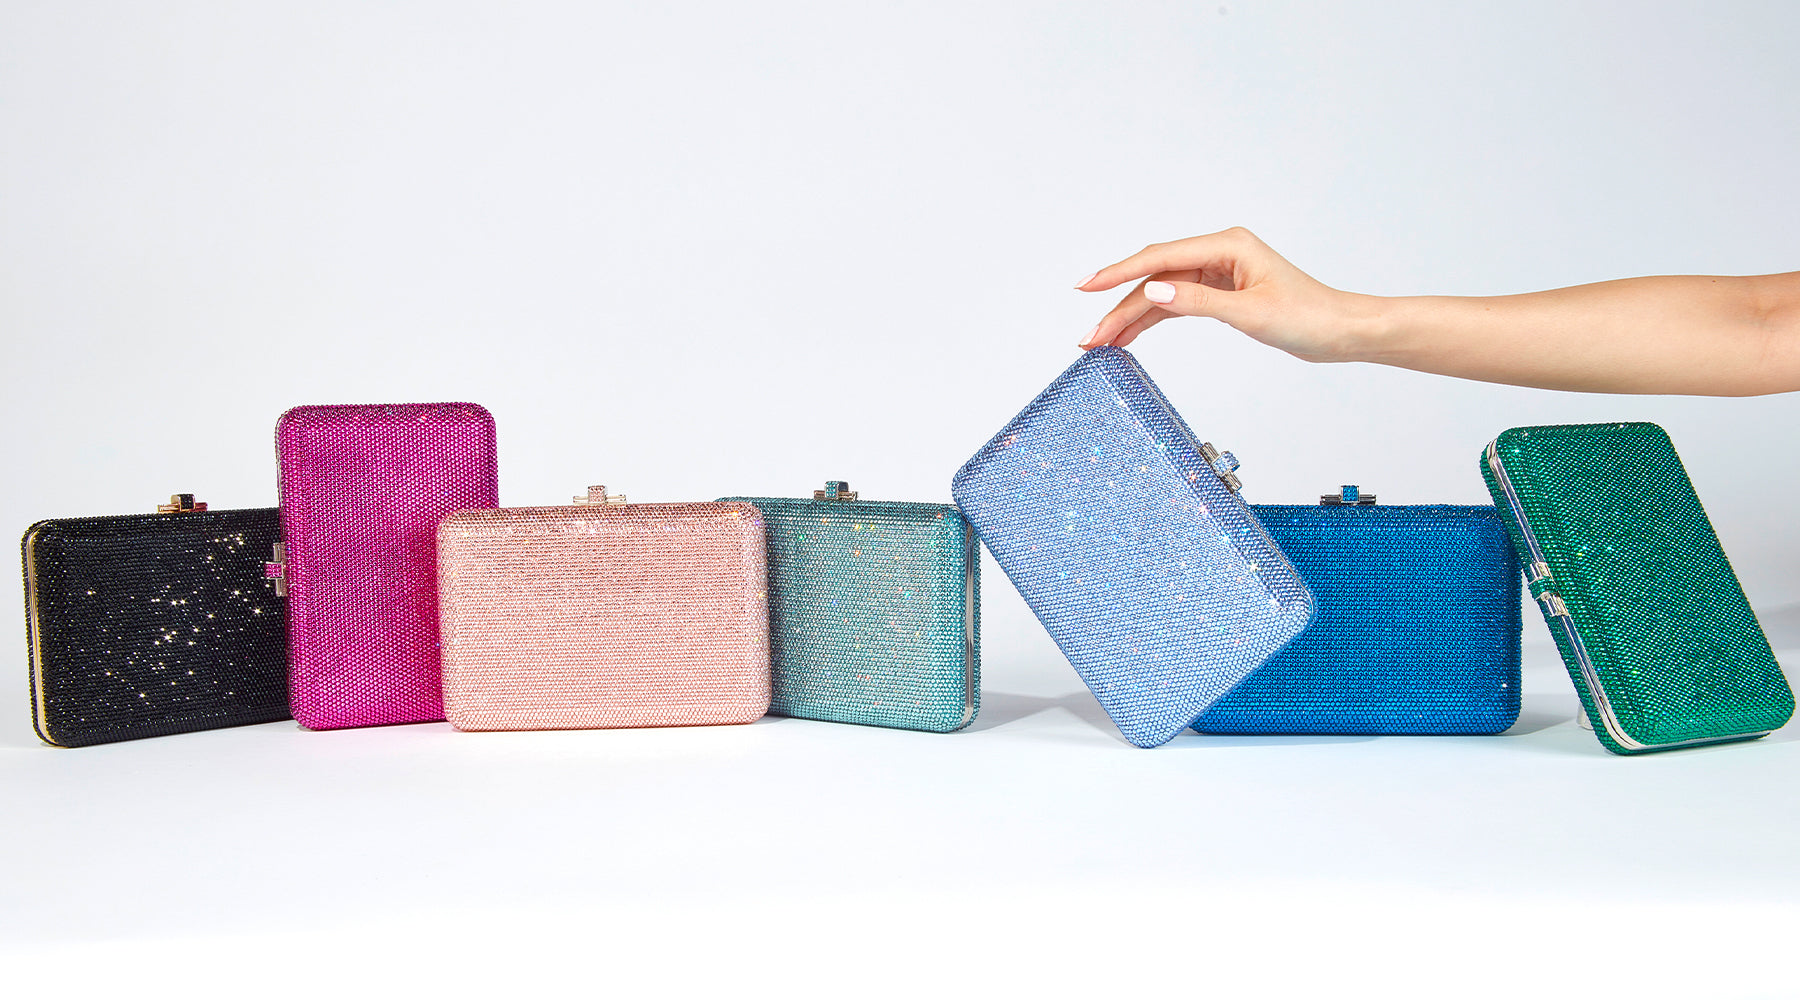 JG Glamor Designer Bags  Olist Women's Other Brands Handbags For Sale In  Nigeria